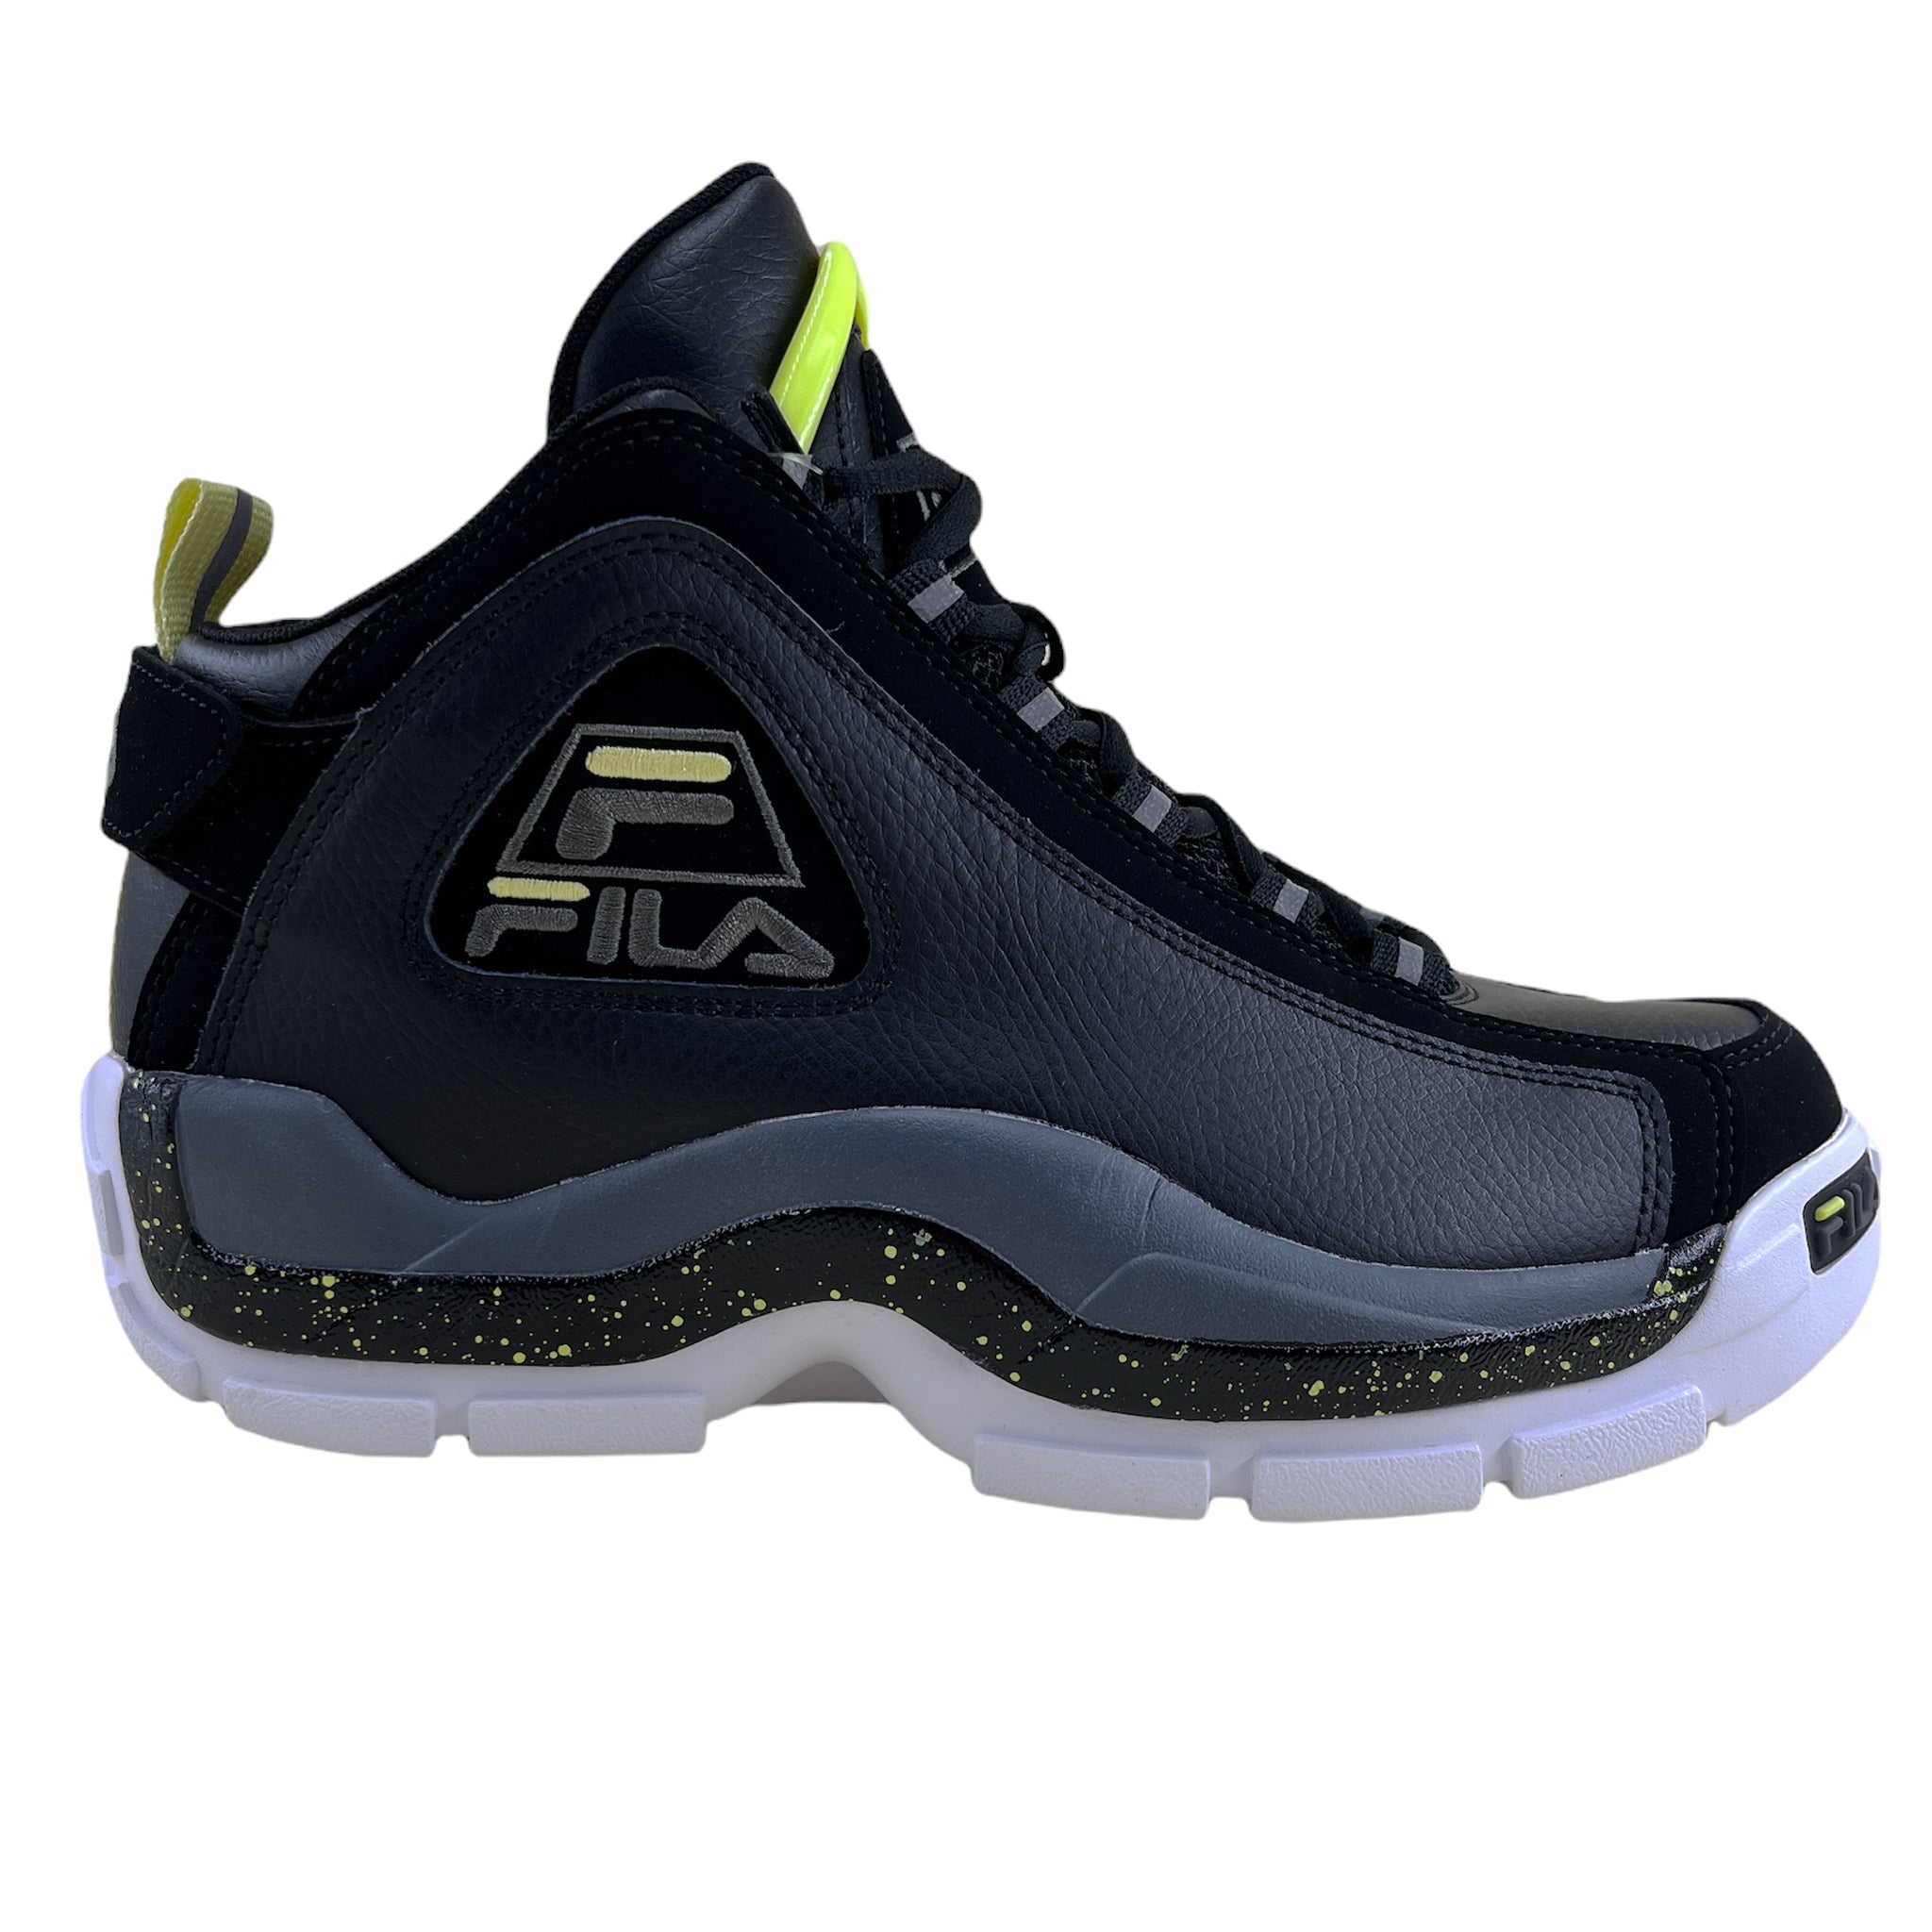 Fila Men's Grant Hill 3 Athletic Basketball Shoes 1BM01289-027 US 13 M